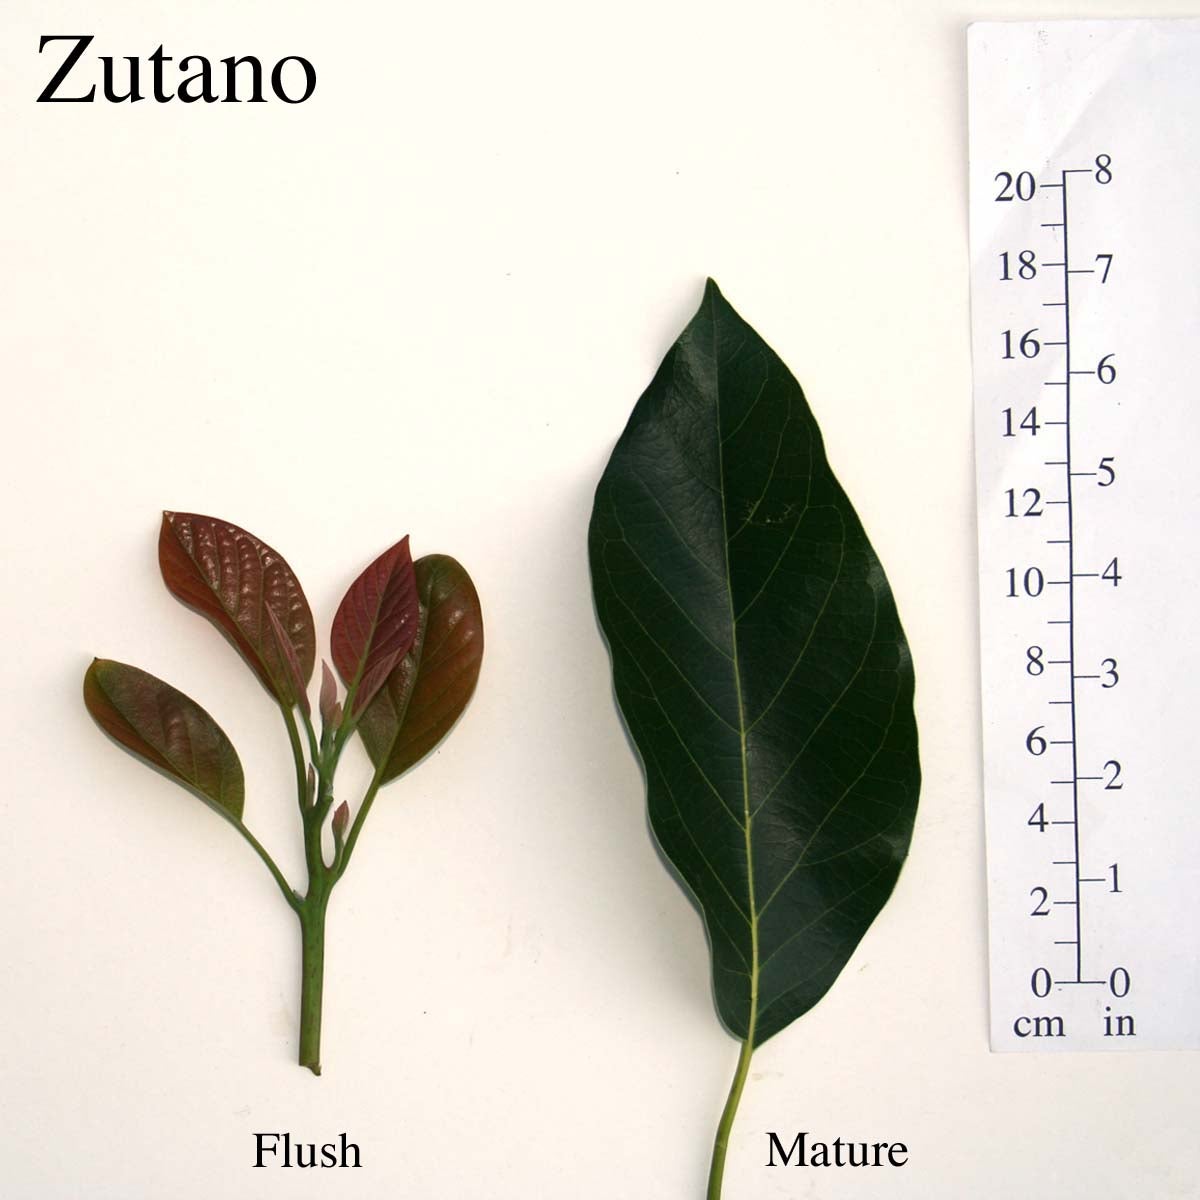 Zutano Leaves